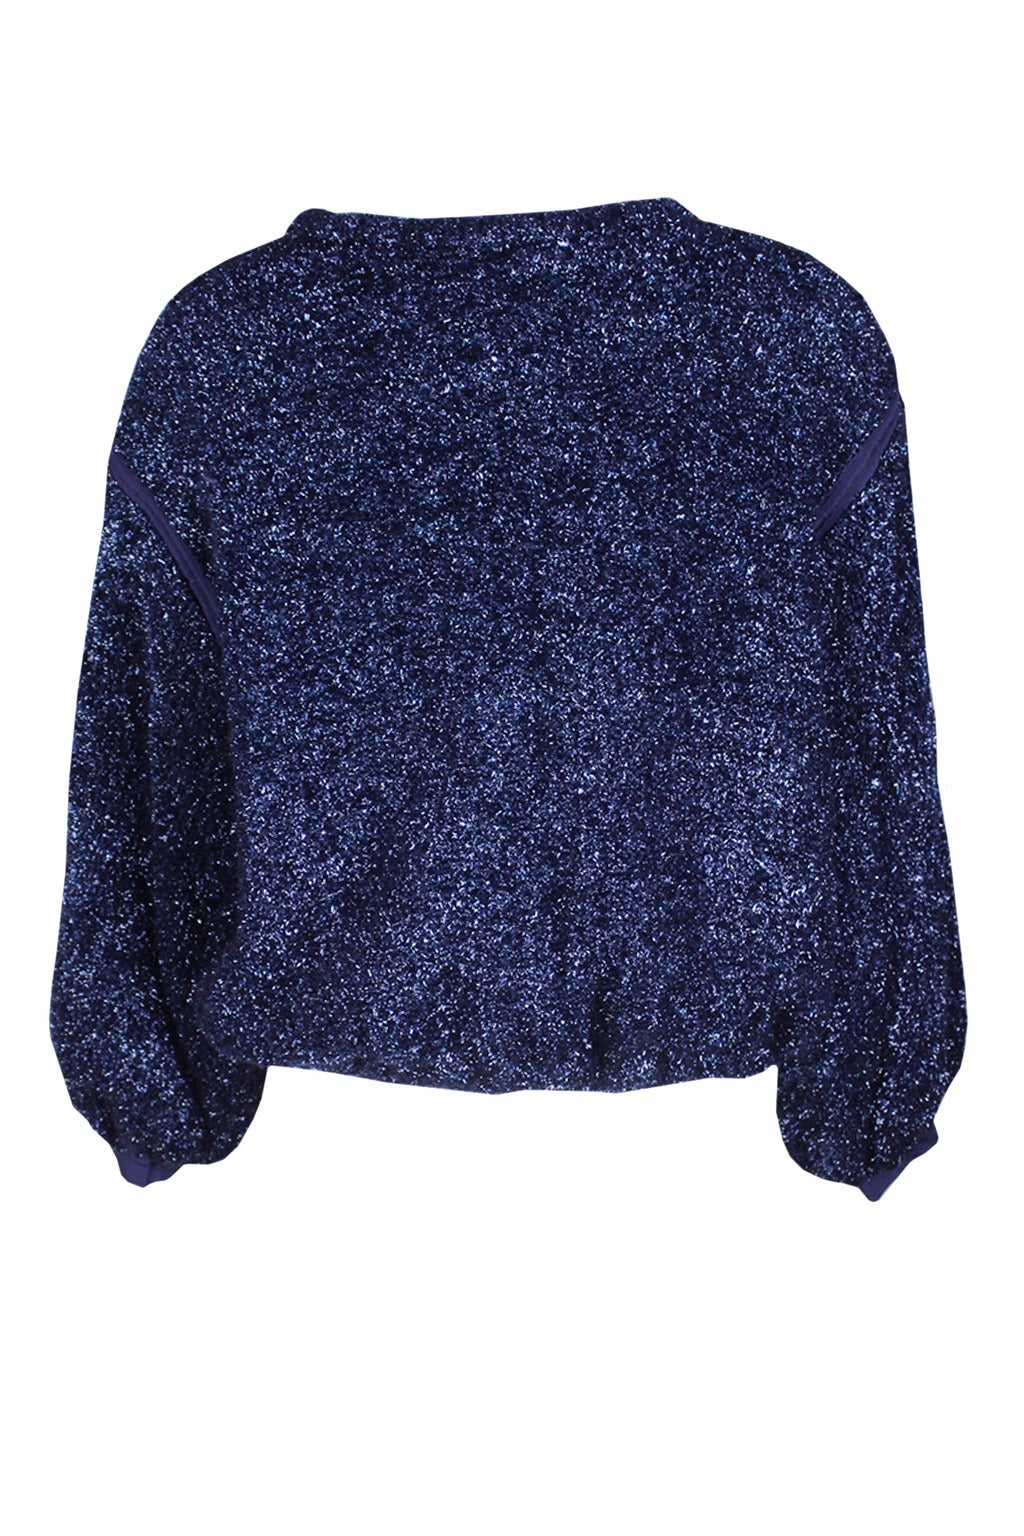 Black Gianfranco Ferre Metallic Blouson Sweater